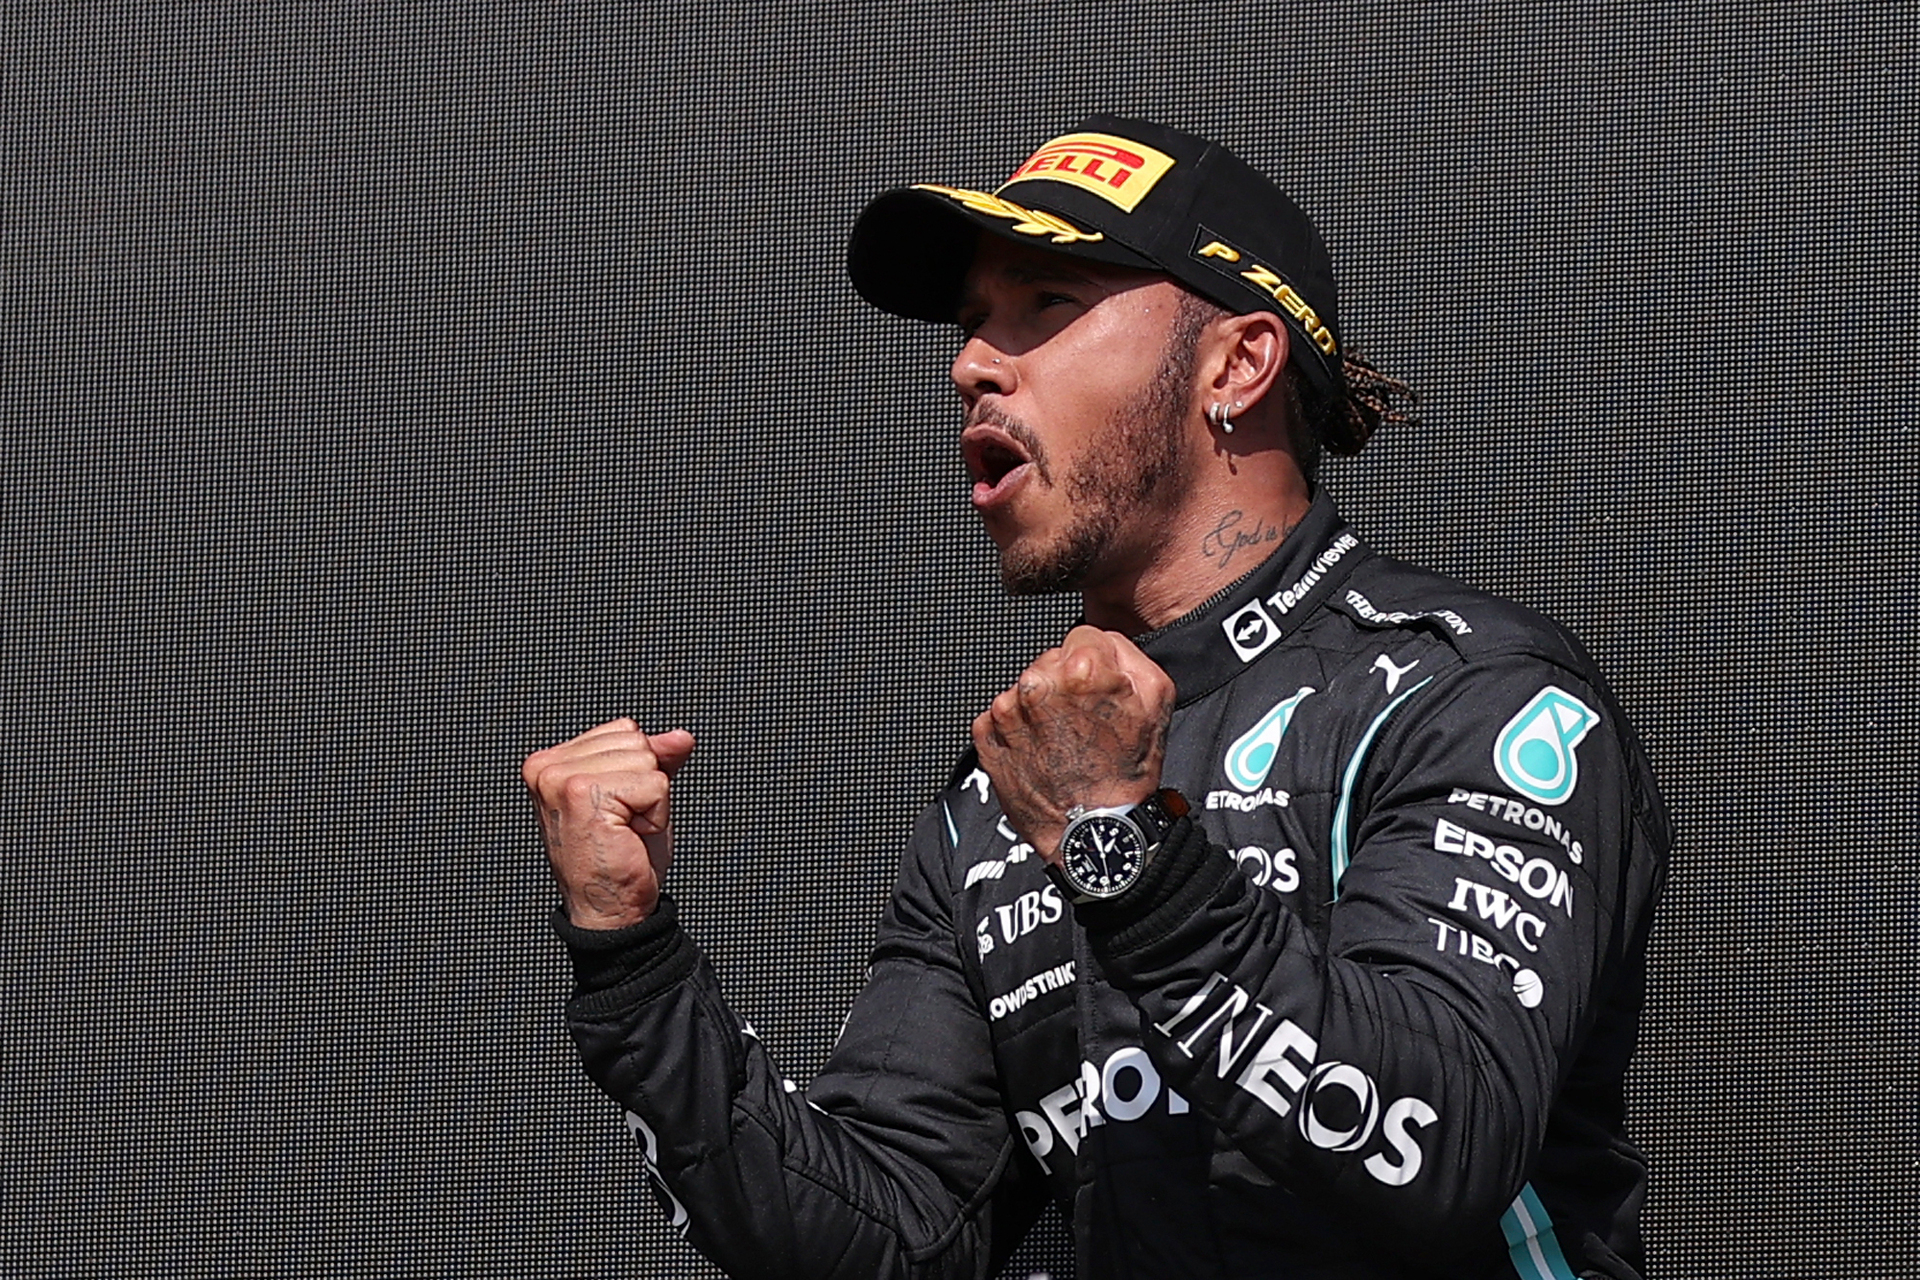 Hamilton roars back to win British GP after Verstappen crash